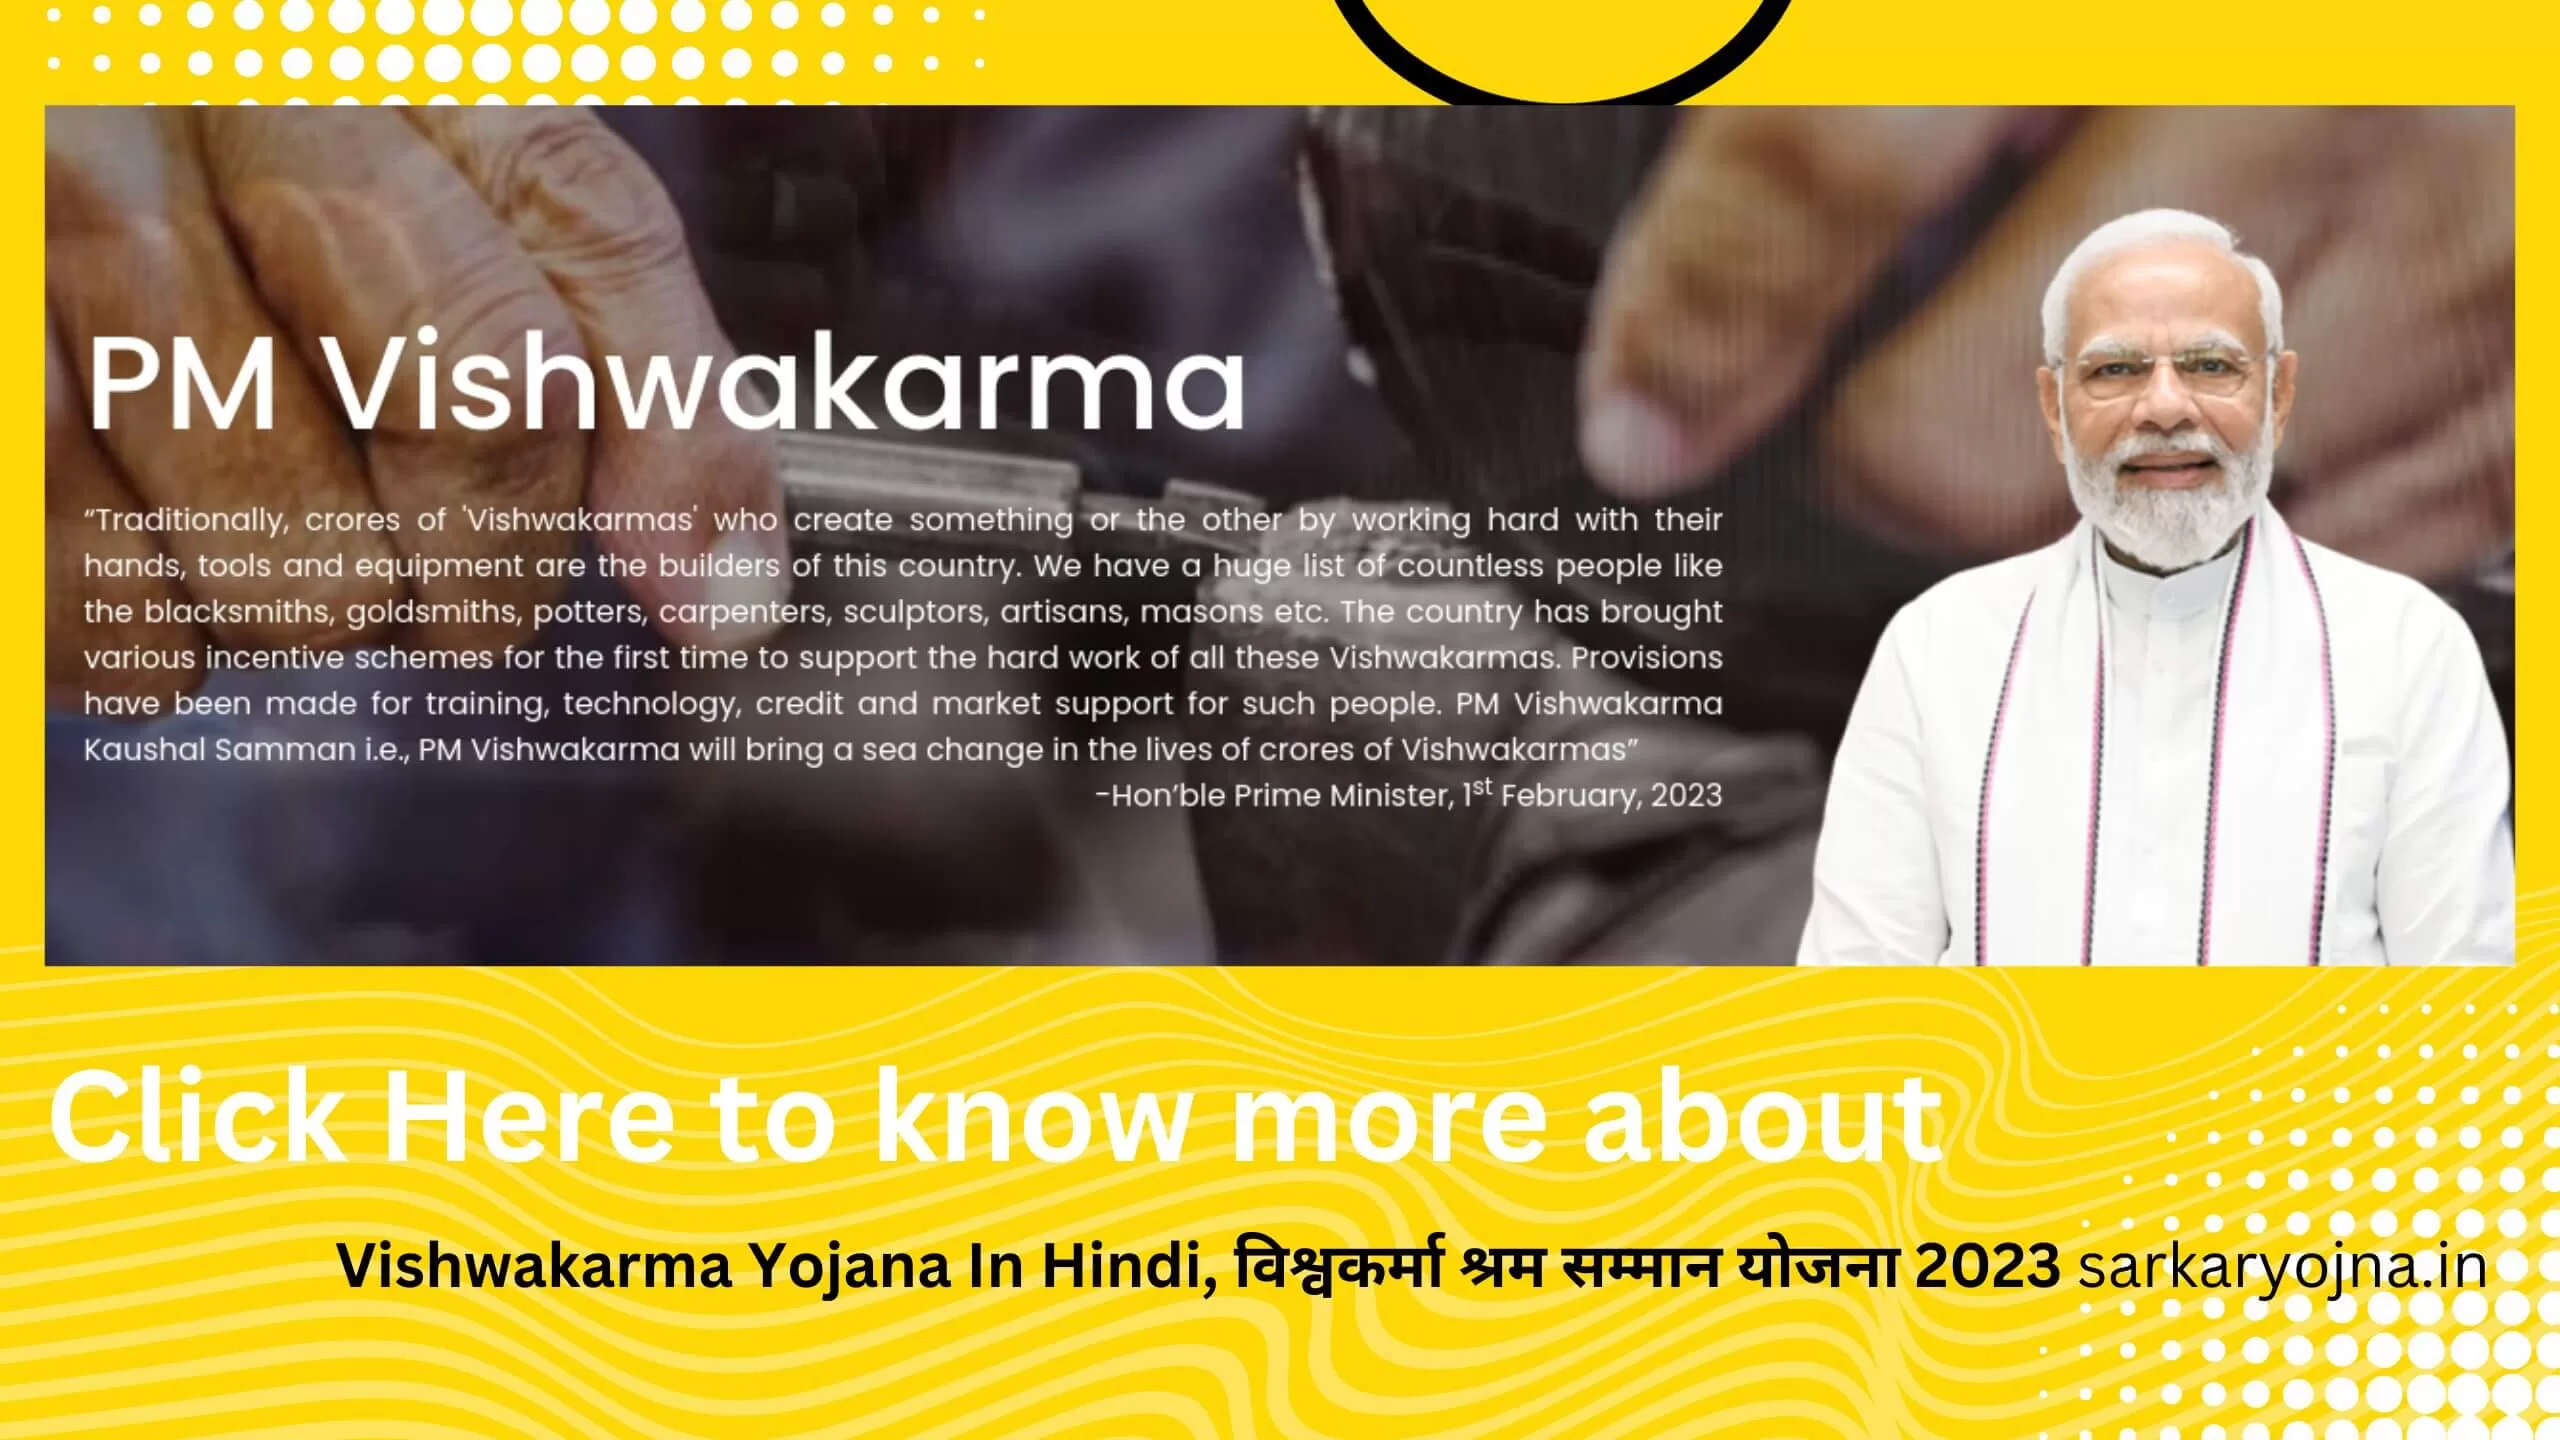 Vishwakarma Yojana In Hindi